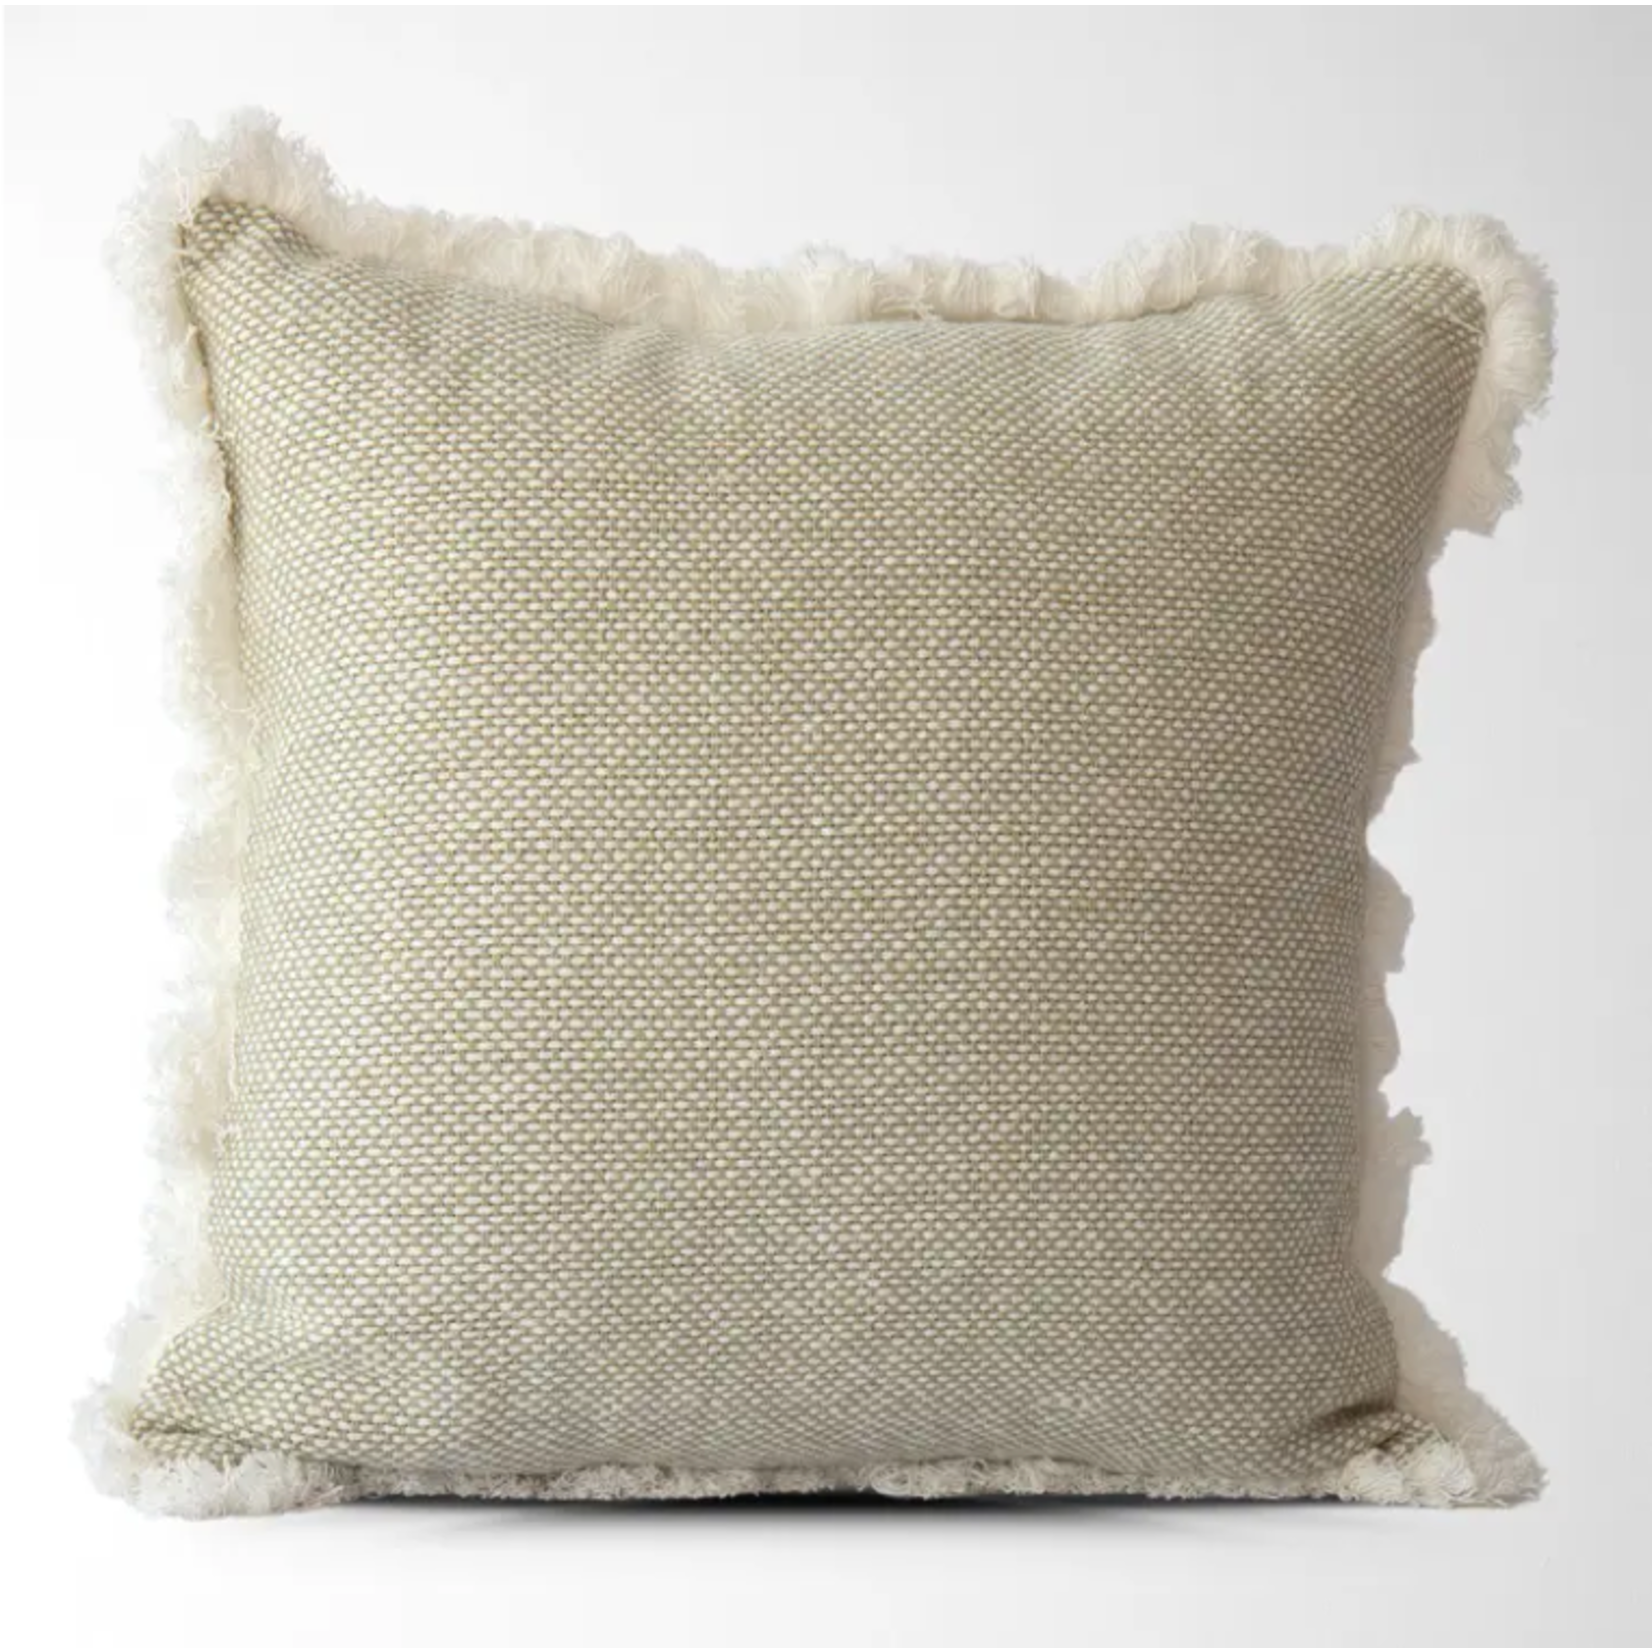 Textured Woven Throw Pillow